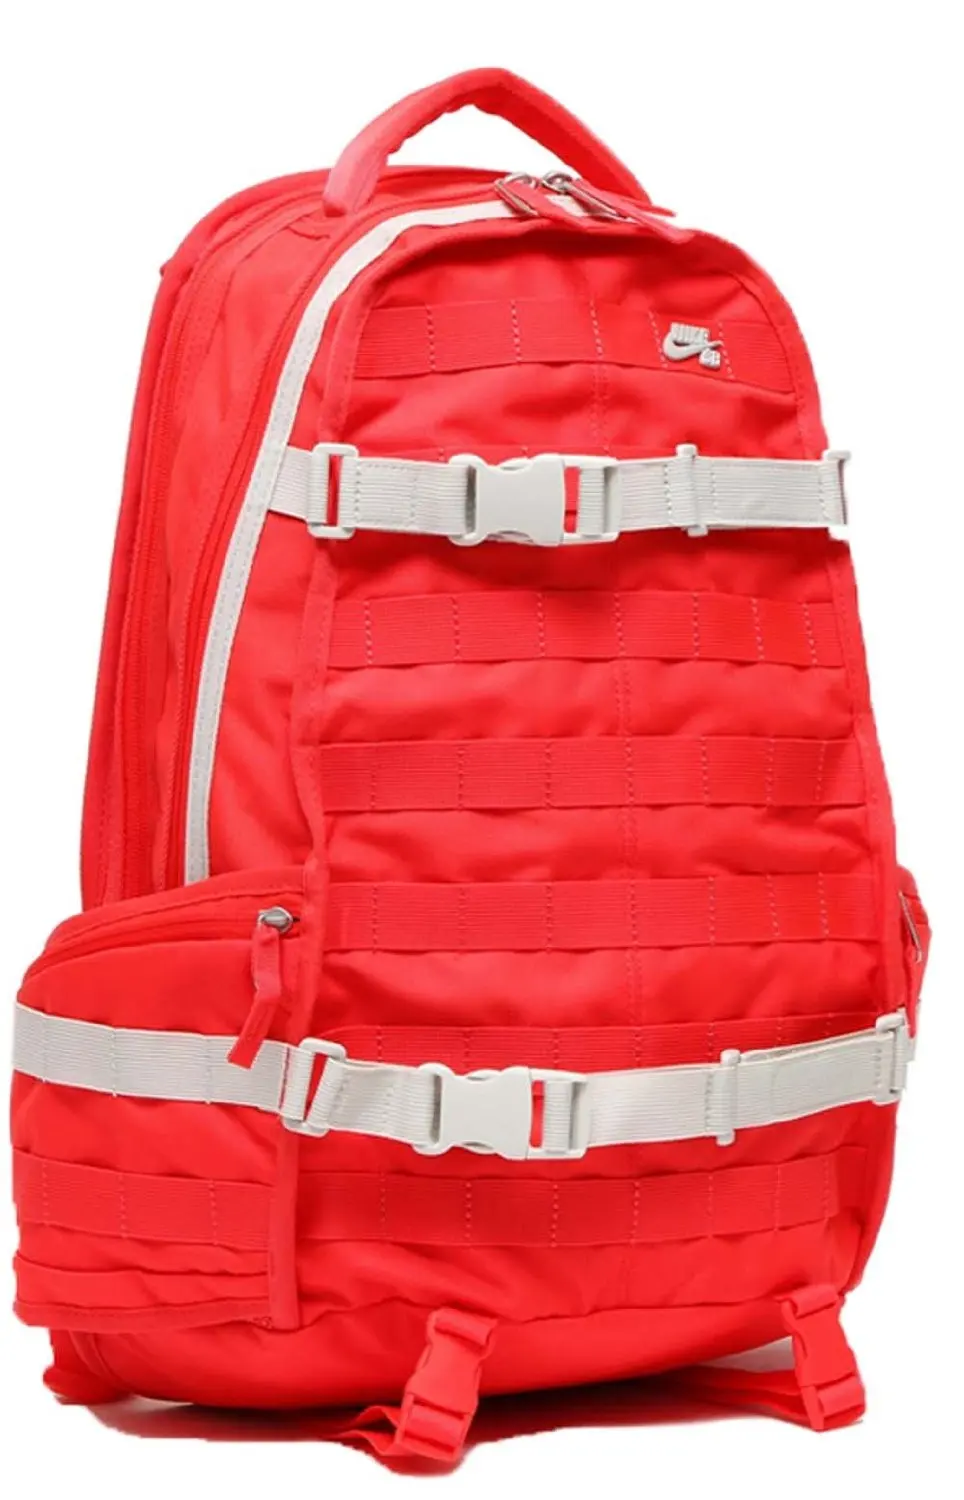 Buy Nike SB Backpack - 1587 Cubic Inch 